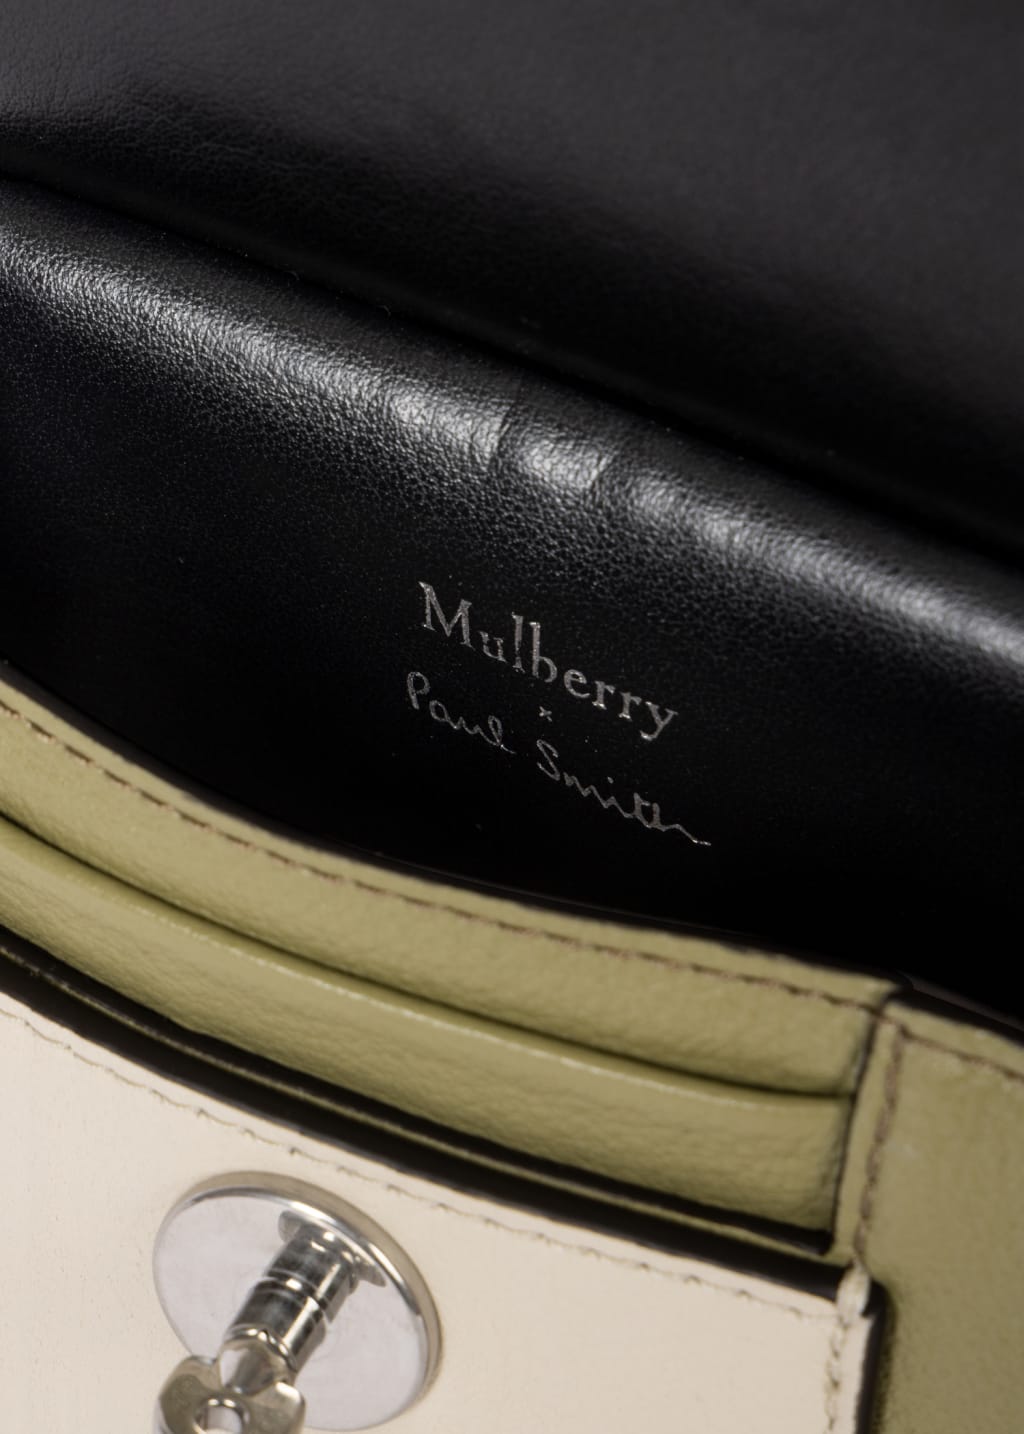 Detail View - Mulberry x Paul Smith - Summer Khaki Mini Antony Bag Paul Smith